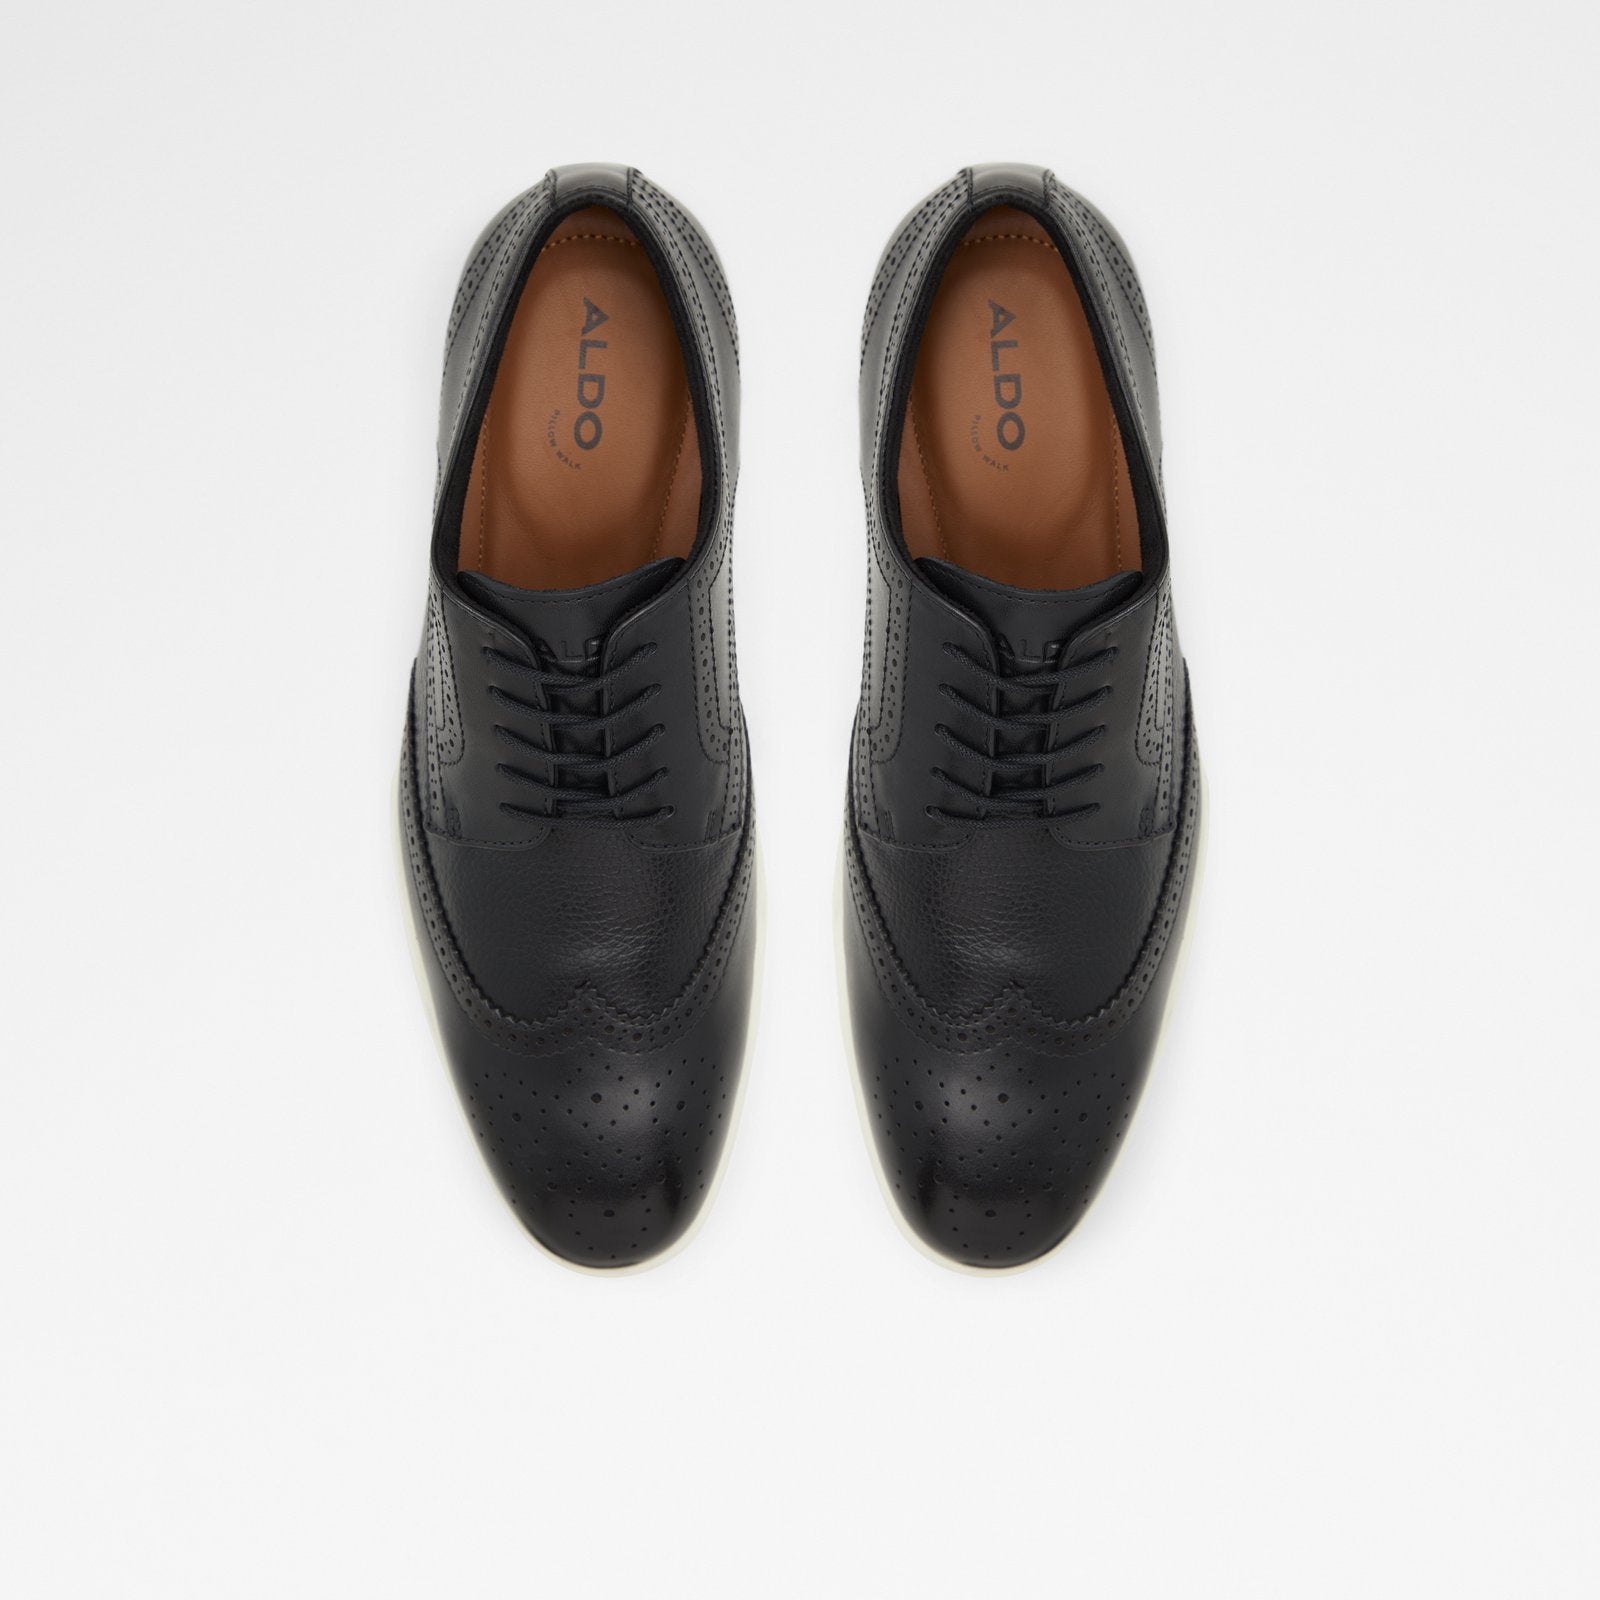 Wiser / Dress Shoes Men Shoes - Black - ALDO KSA